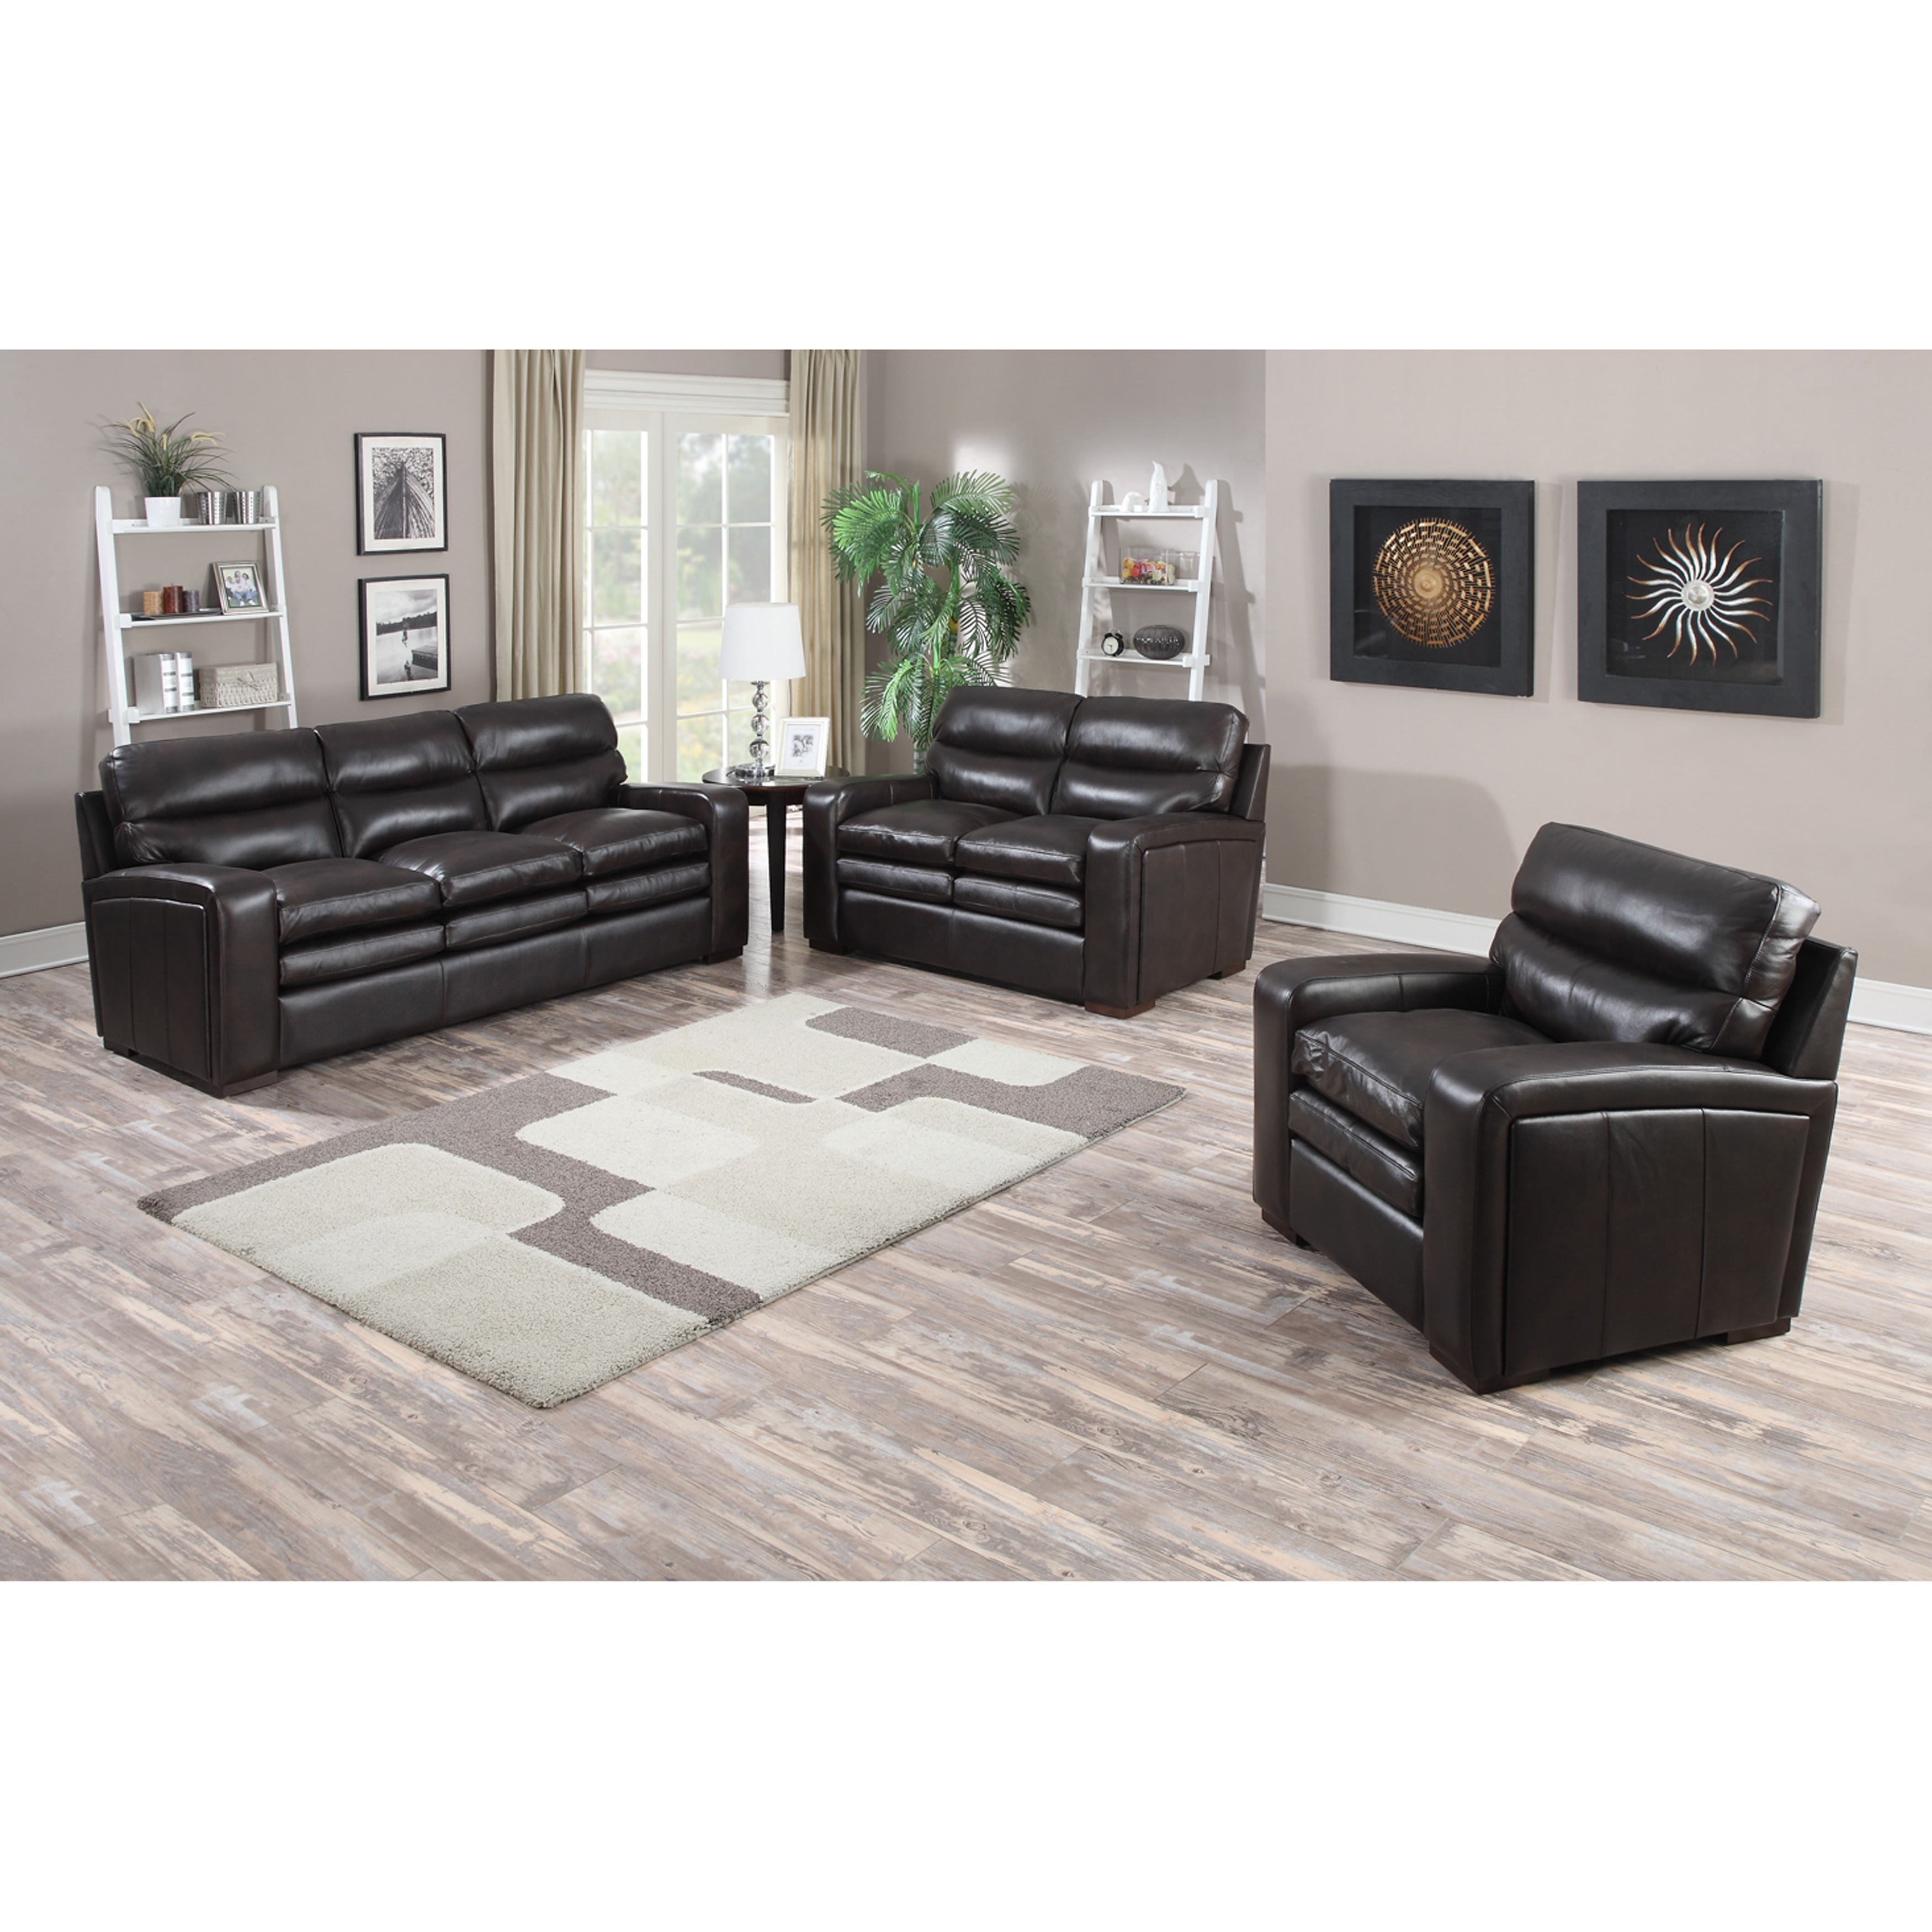 Mercer Dark Brown Italian Leather Sofa, Loveseat And Chair